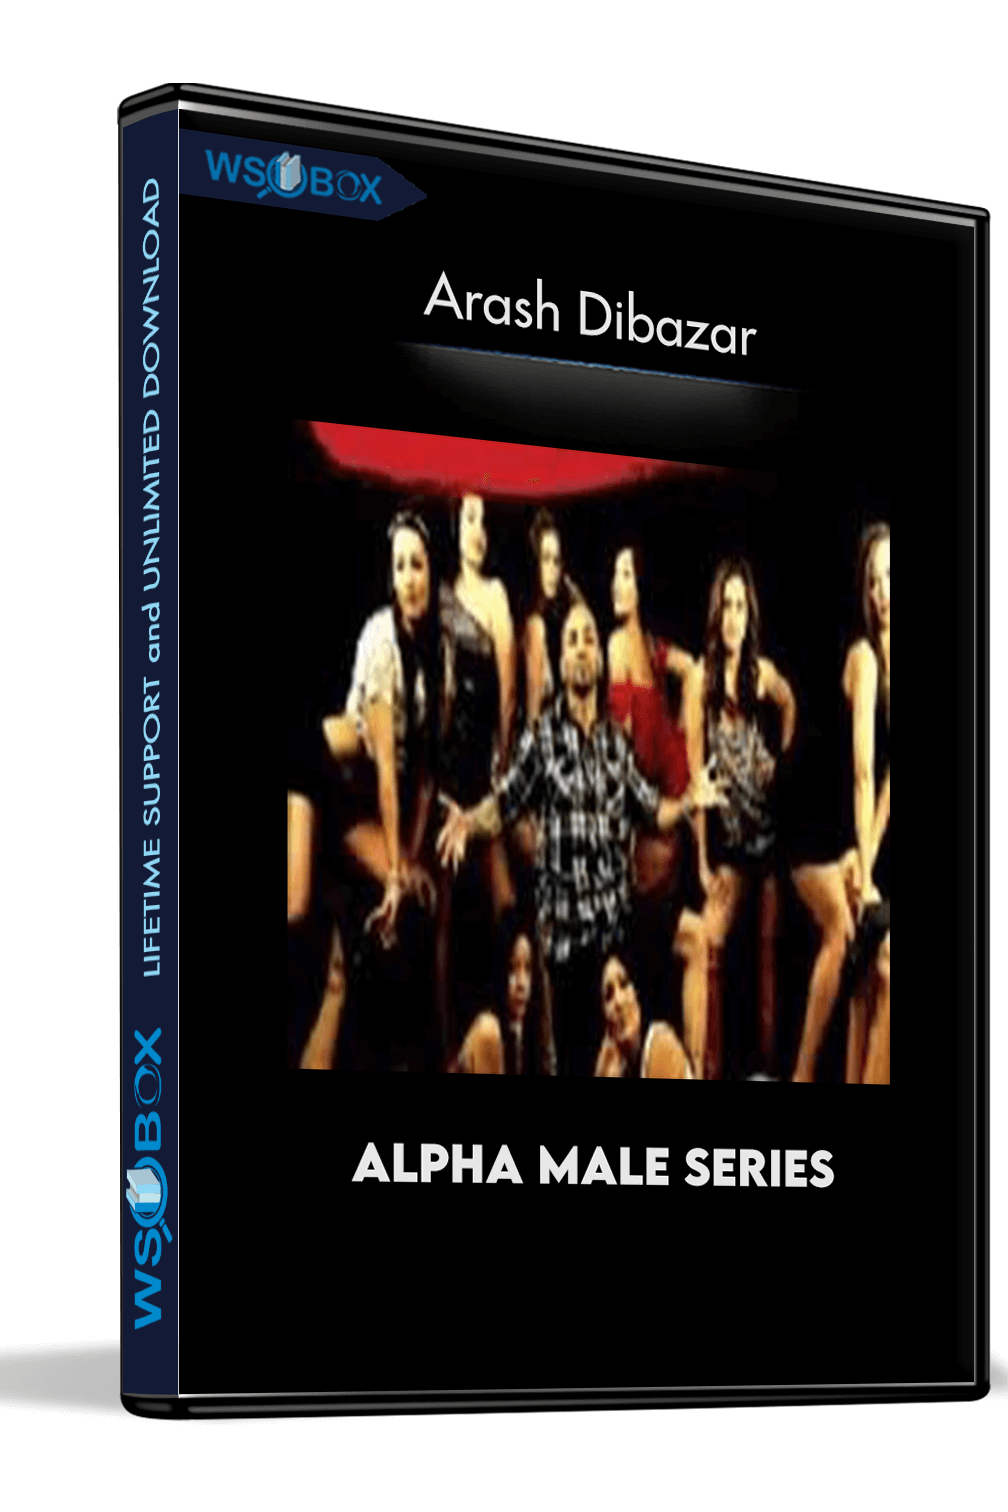 alpha-male-series-arash-dibazar